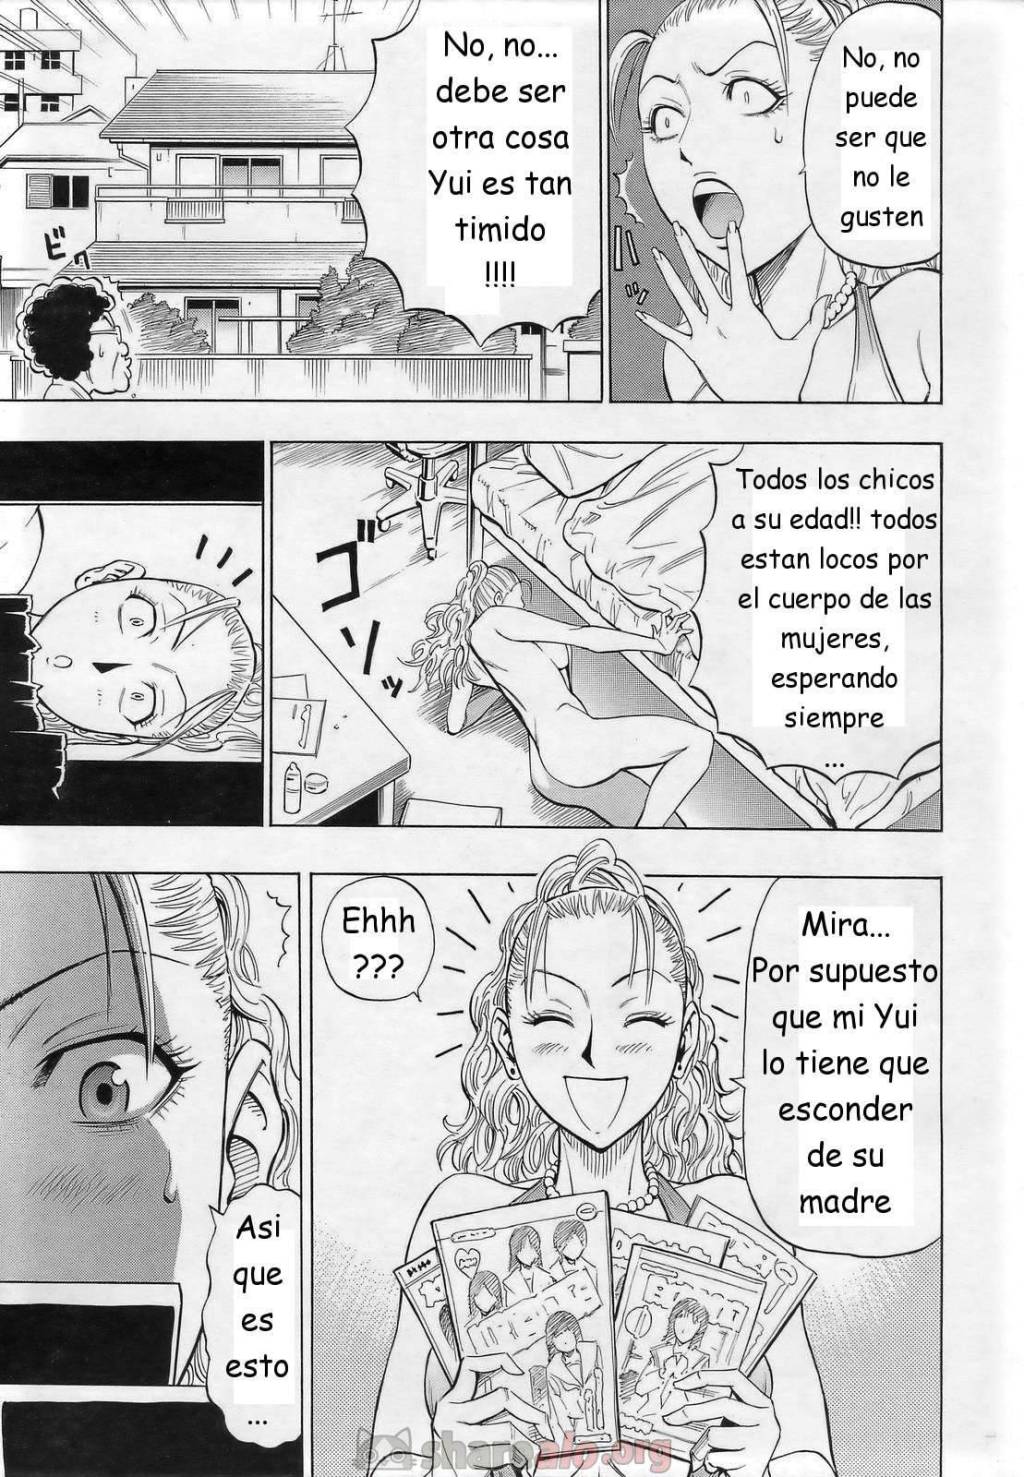 Sailor Mama (Mama Marinerita) - 5 - Comics Porno - Hentai Manga - Cartoon XXX